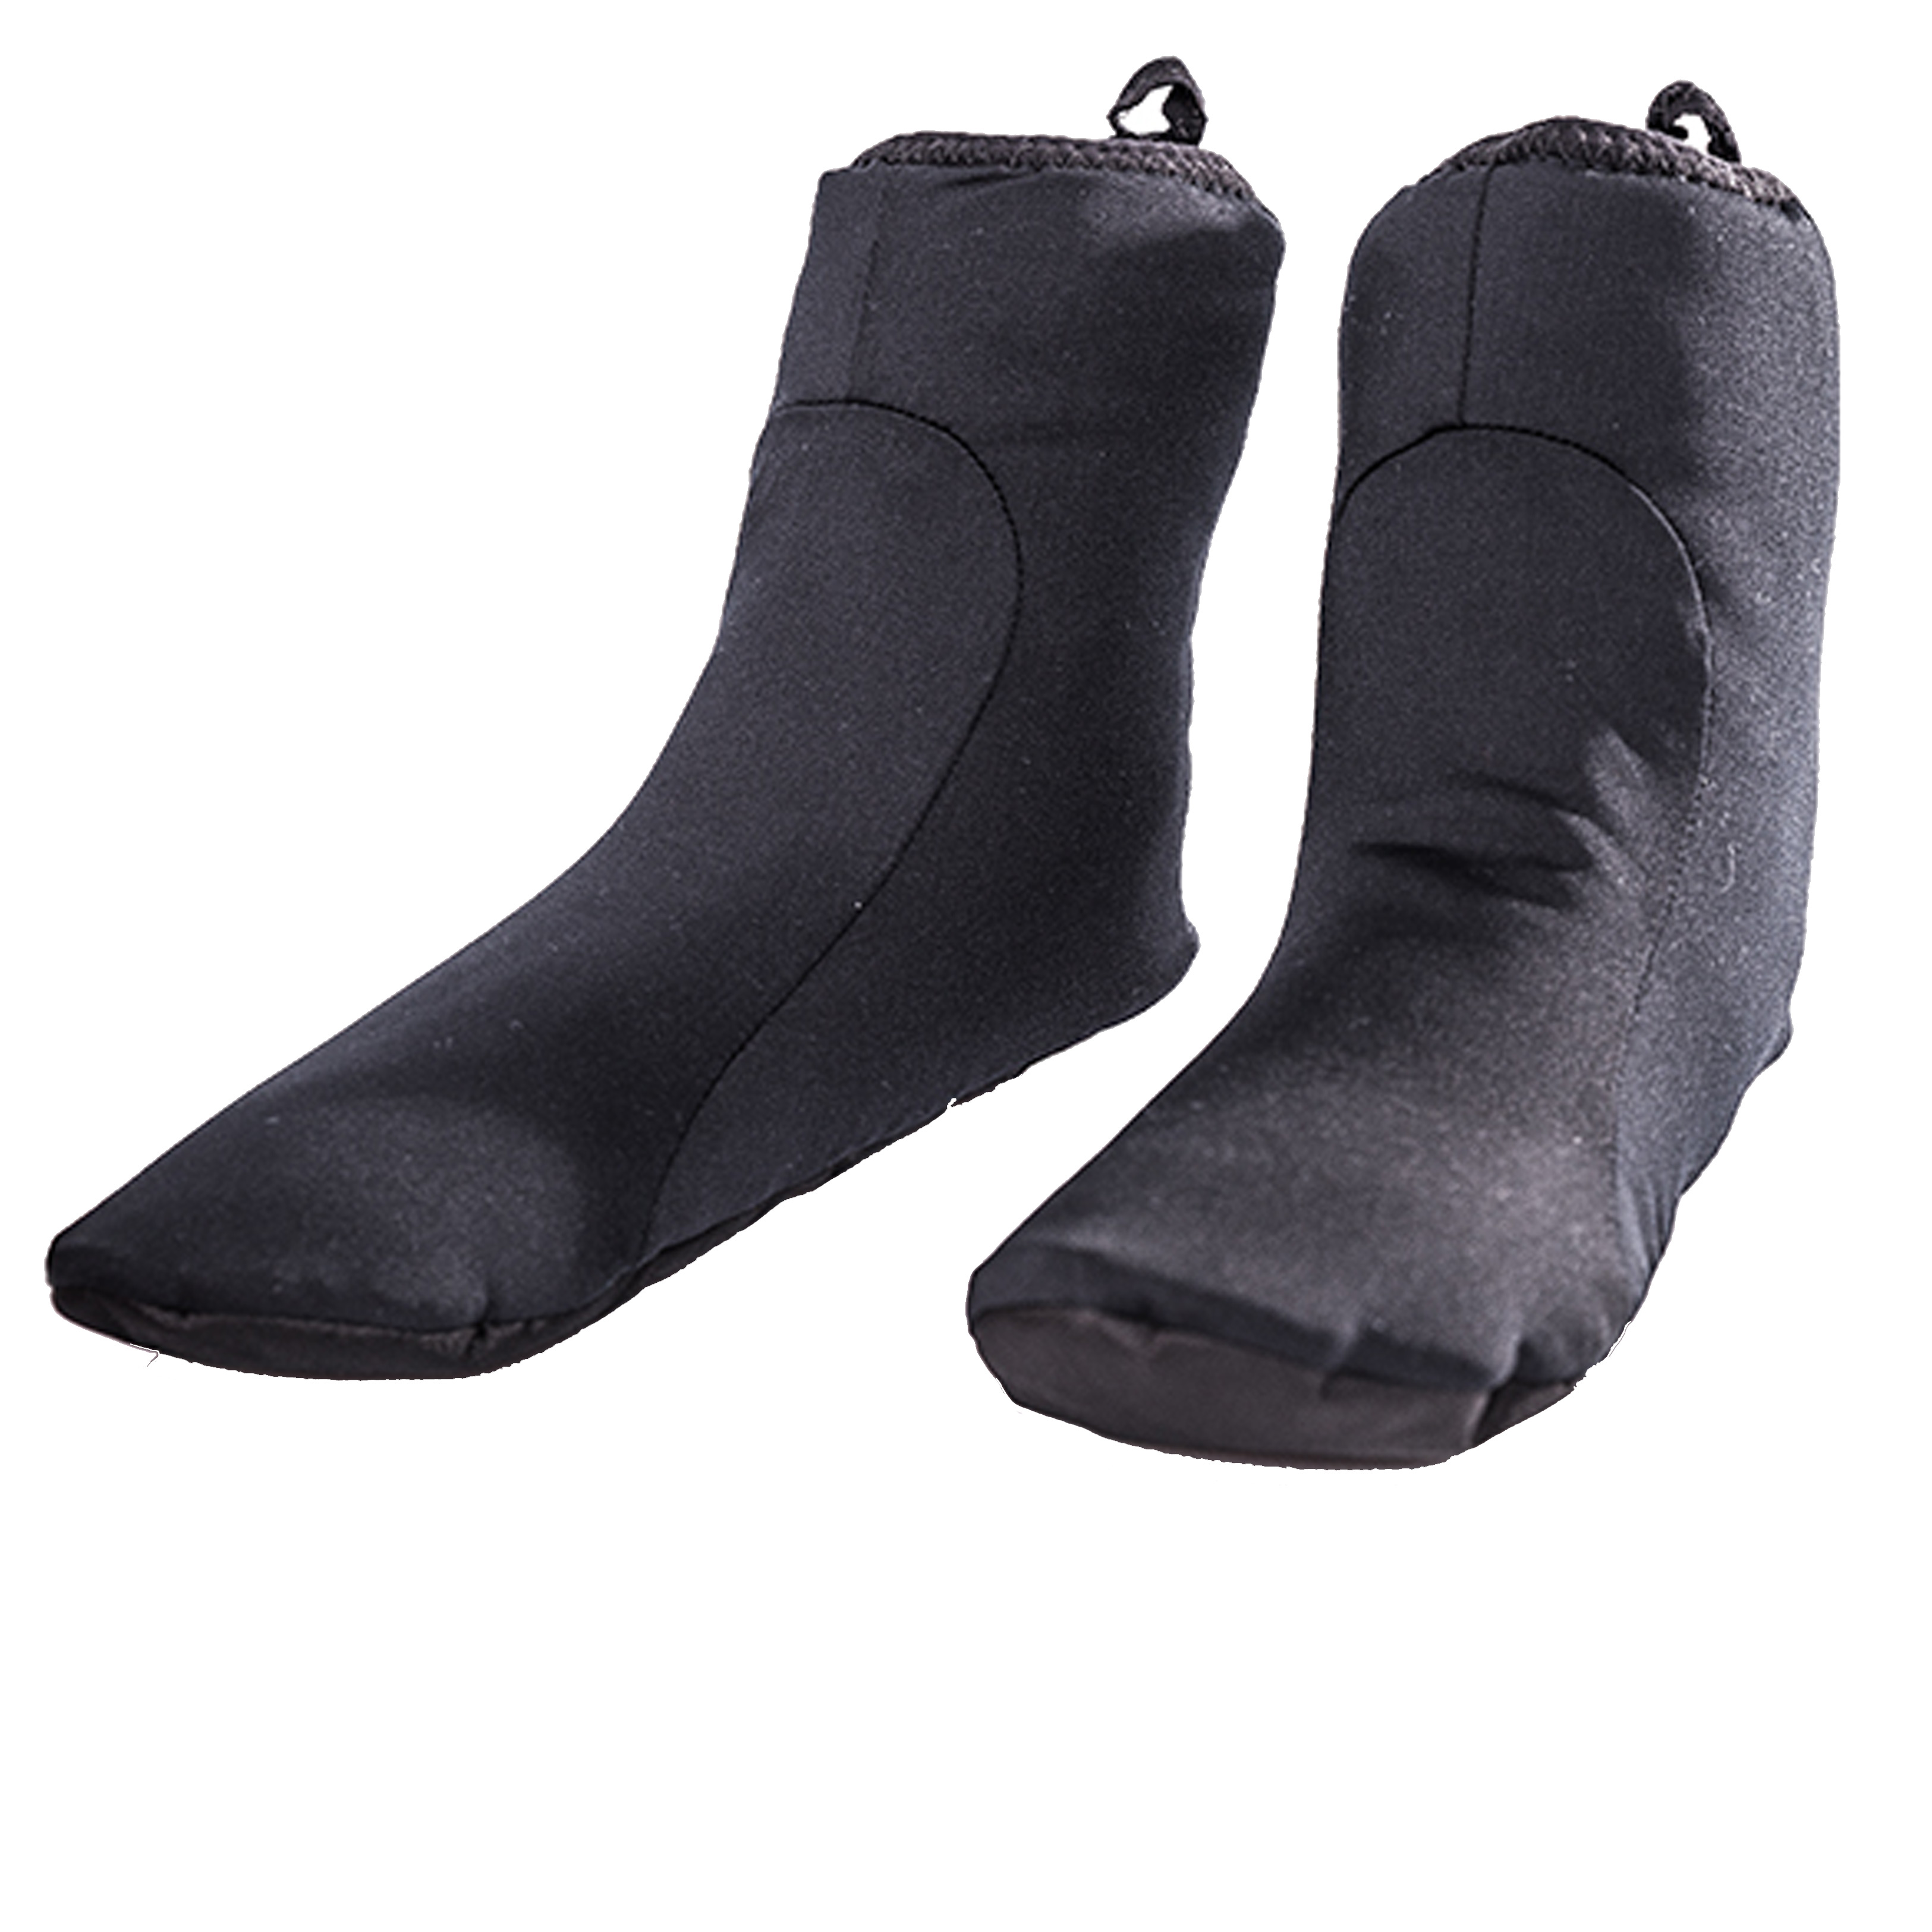 SANTI Primaloft Comfort Socks